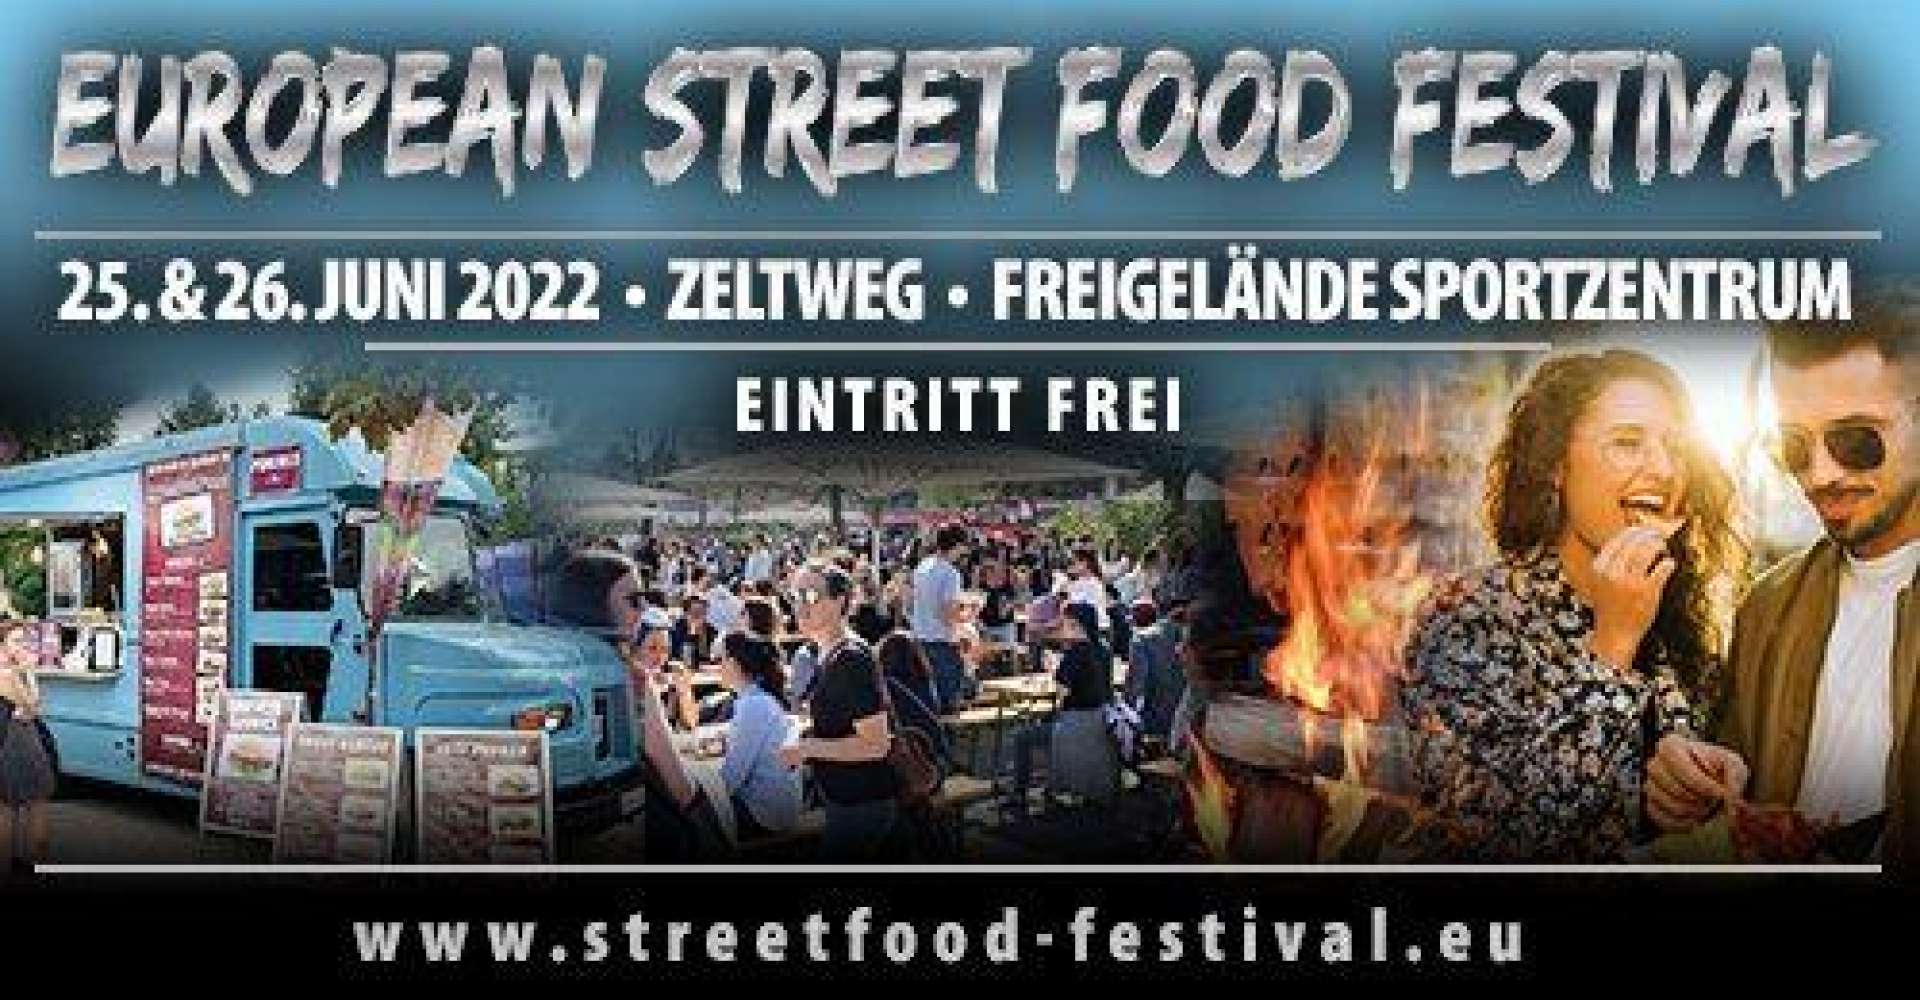  Copyright:EUROPEAN STREET FOOD FESTIVAL